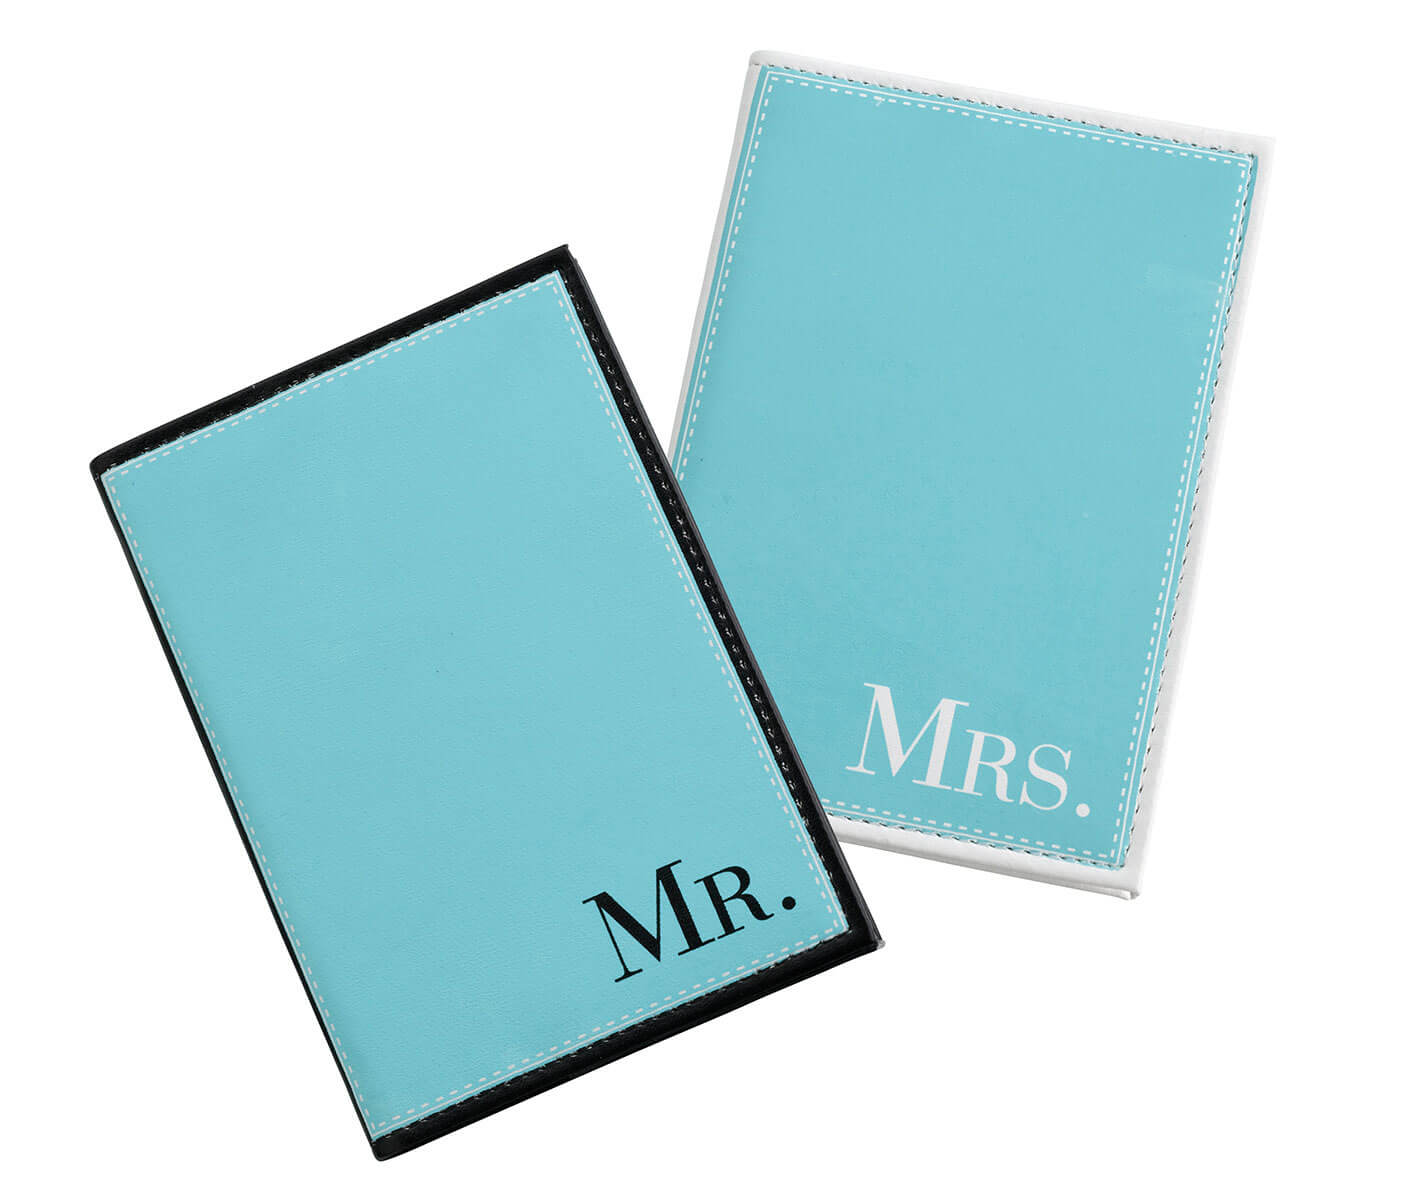 Mr. and Mrs. Aqua Passport Covers